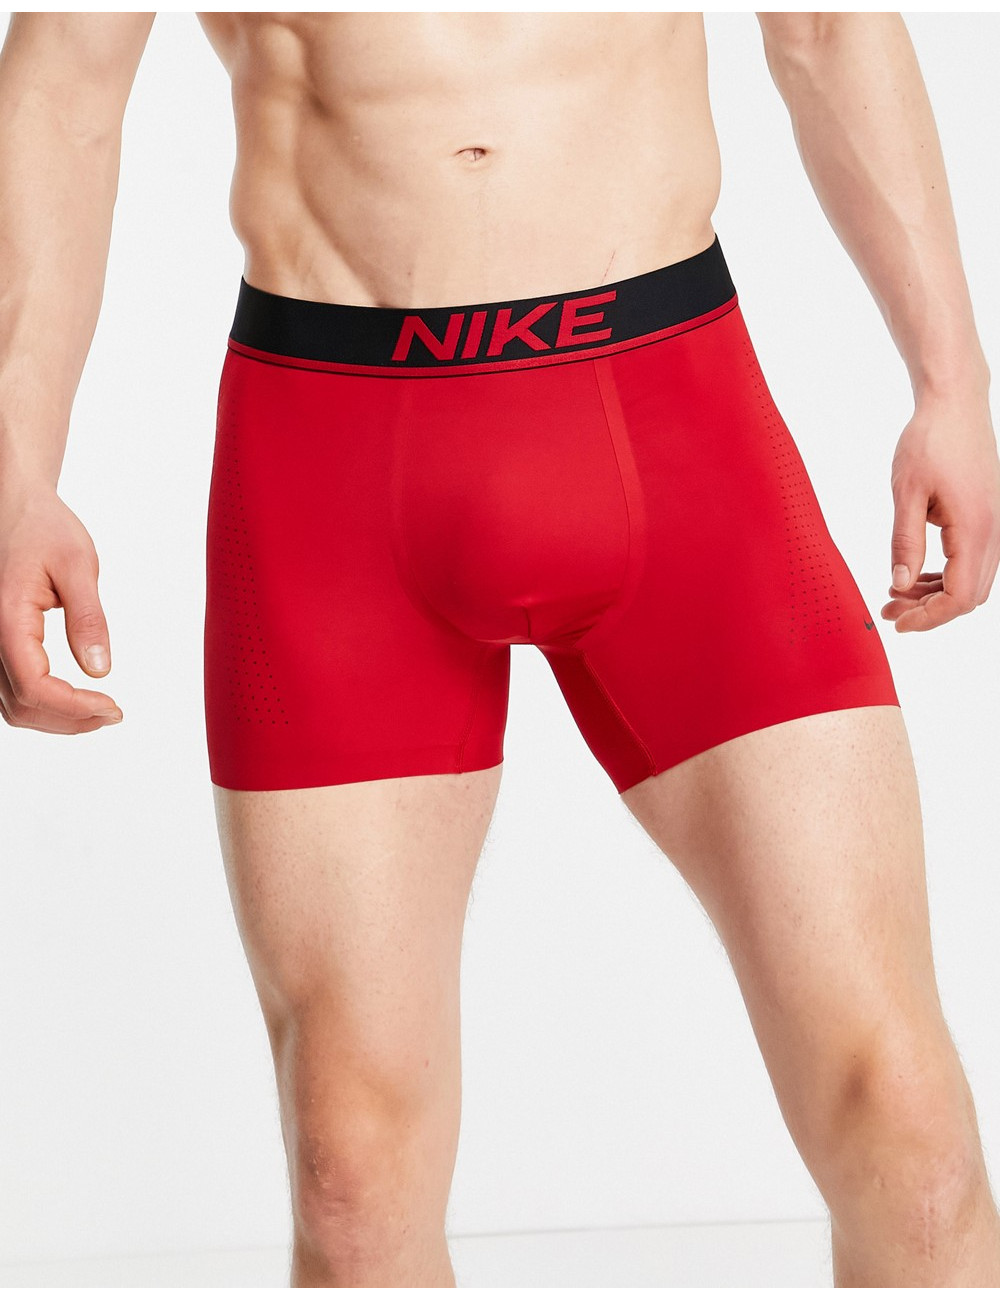 Nike Elite Micro trunks in red